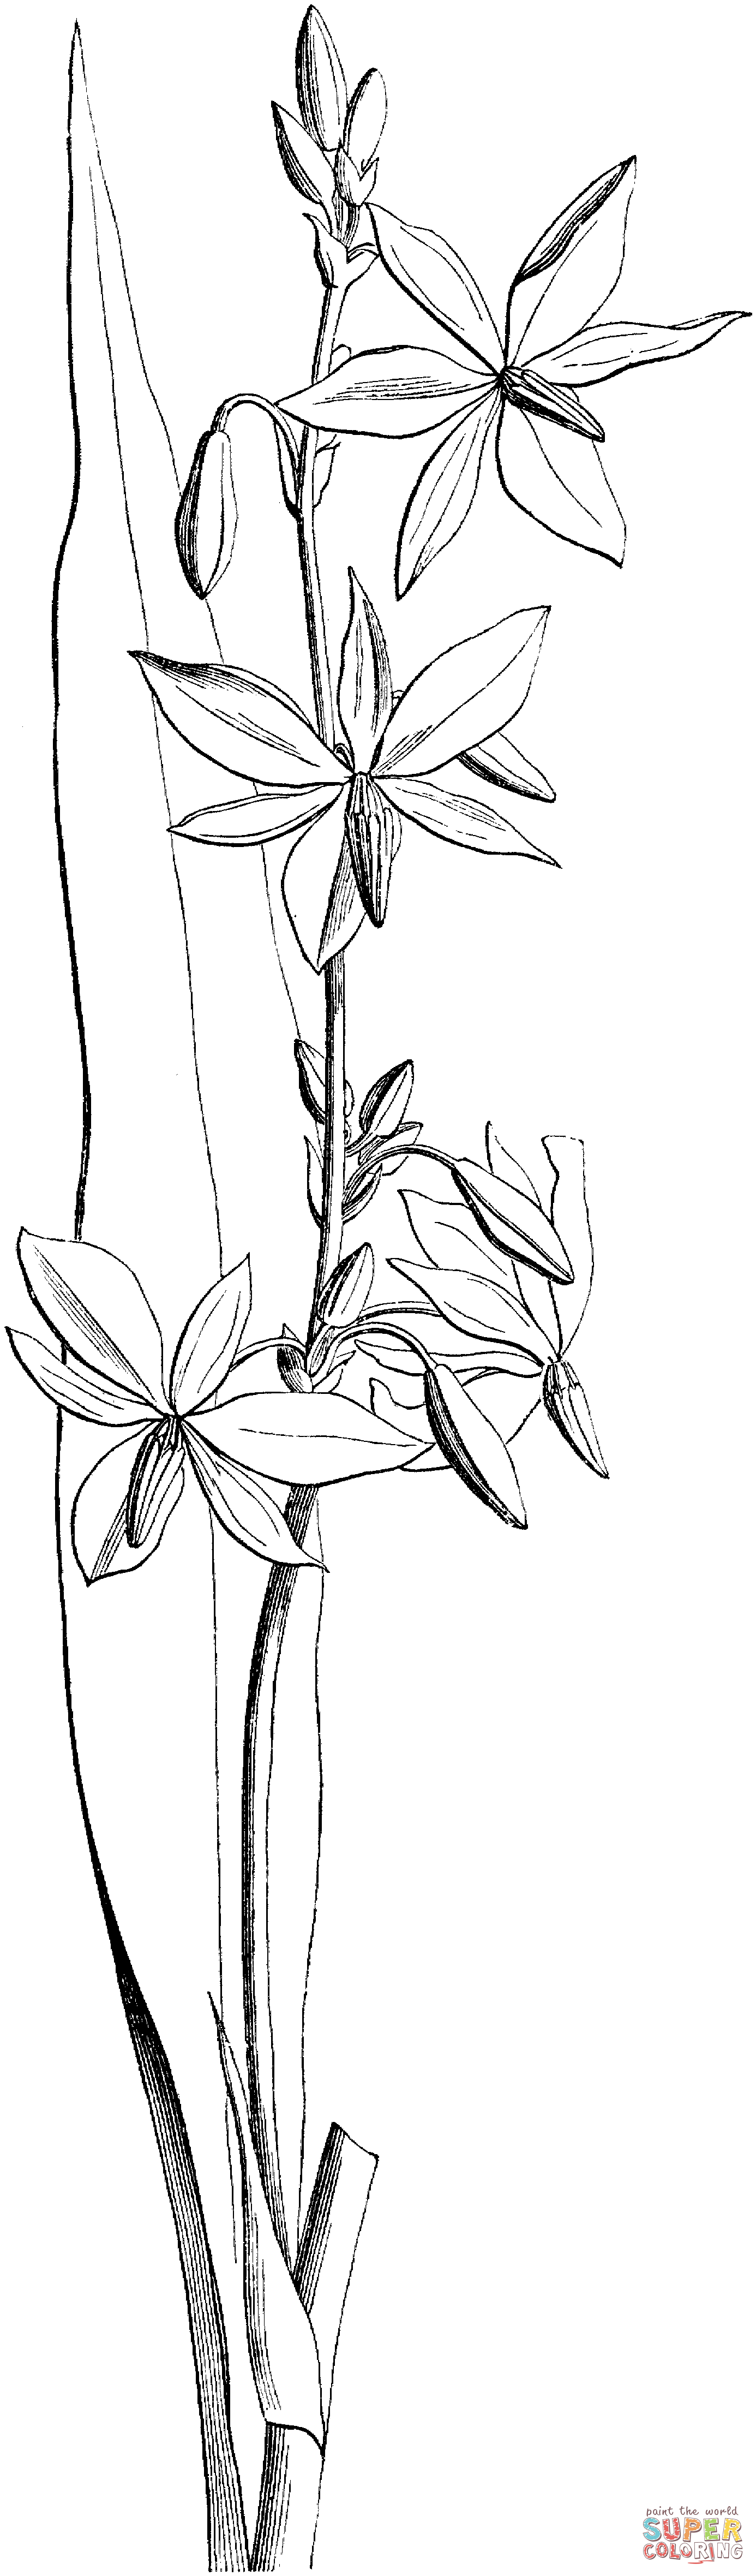 Orquídea victoriana australiana de Orchid